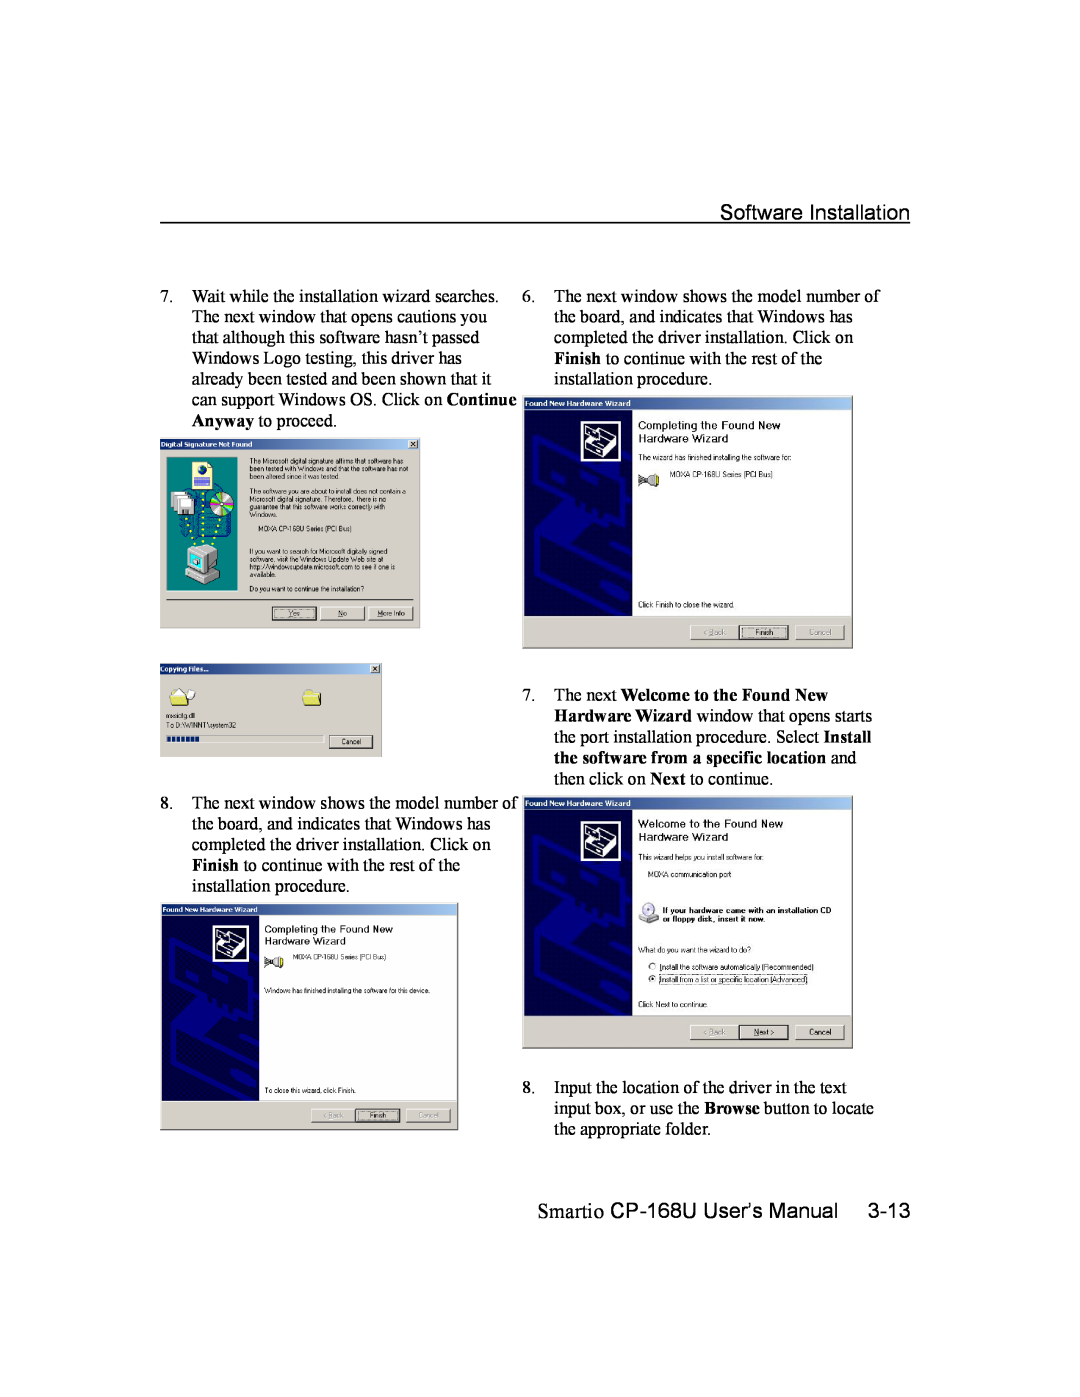 Moxa Technologies user manual Software Installation, Smartio CP-168U User’s Manual 